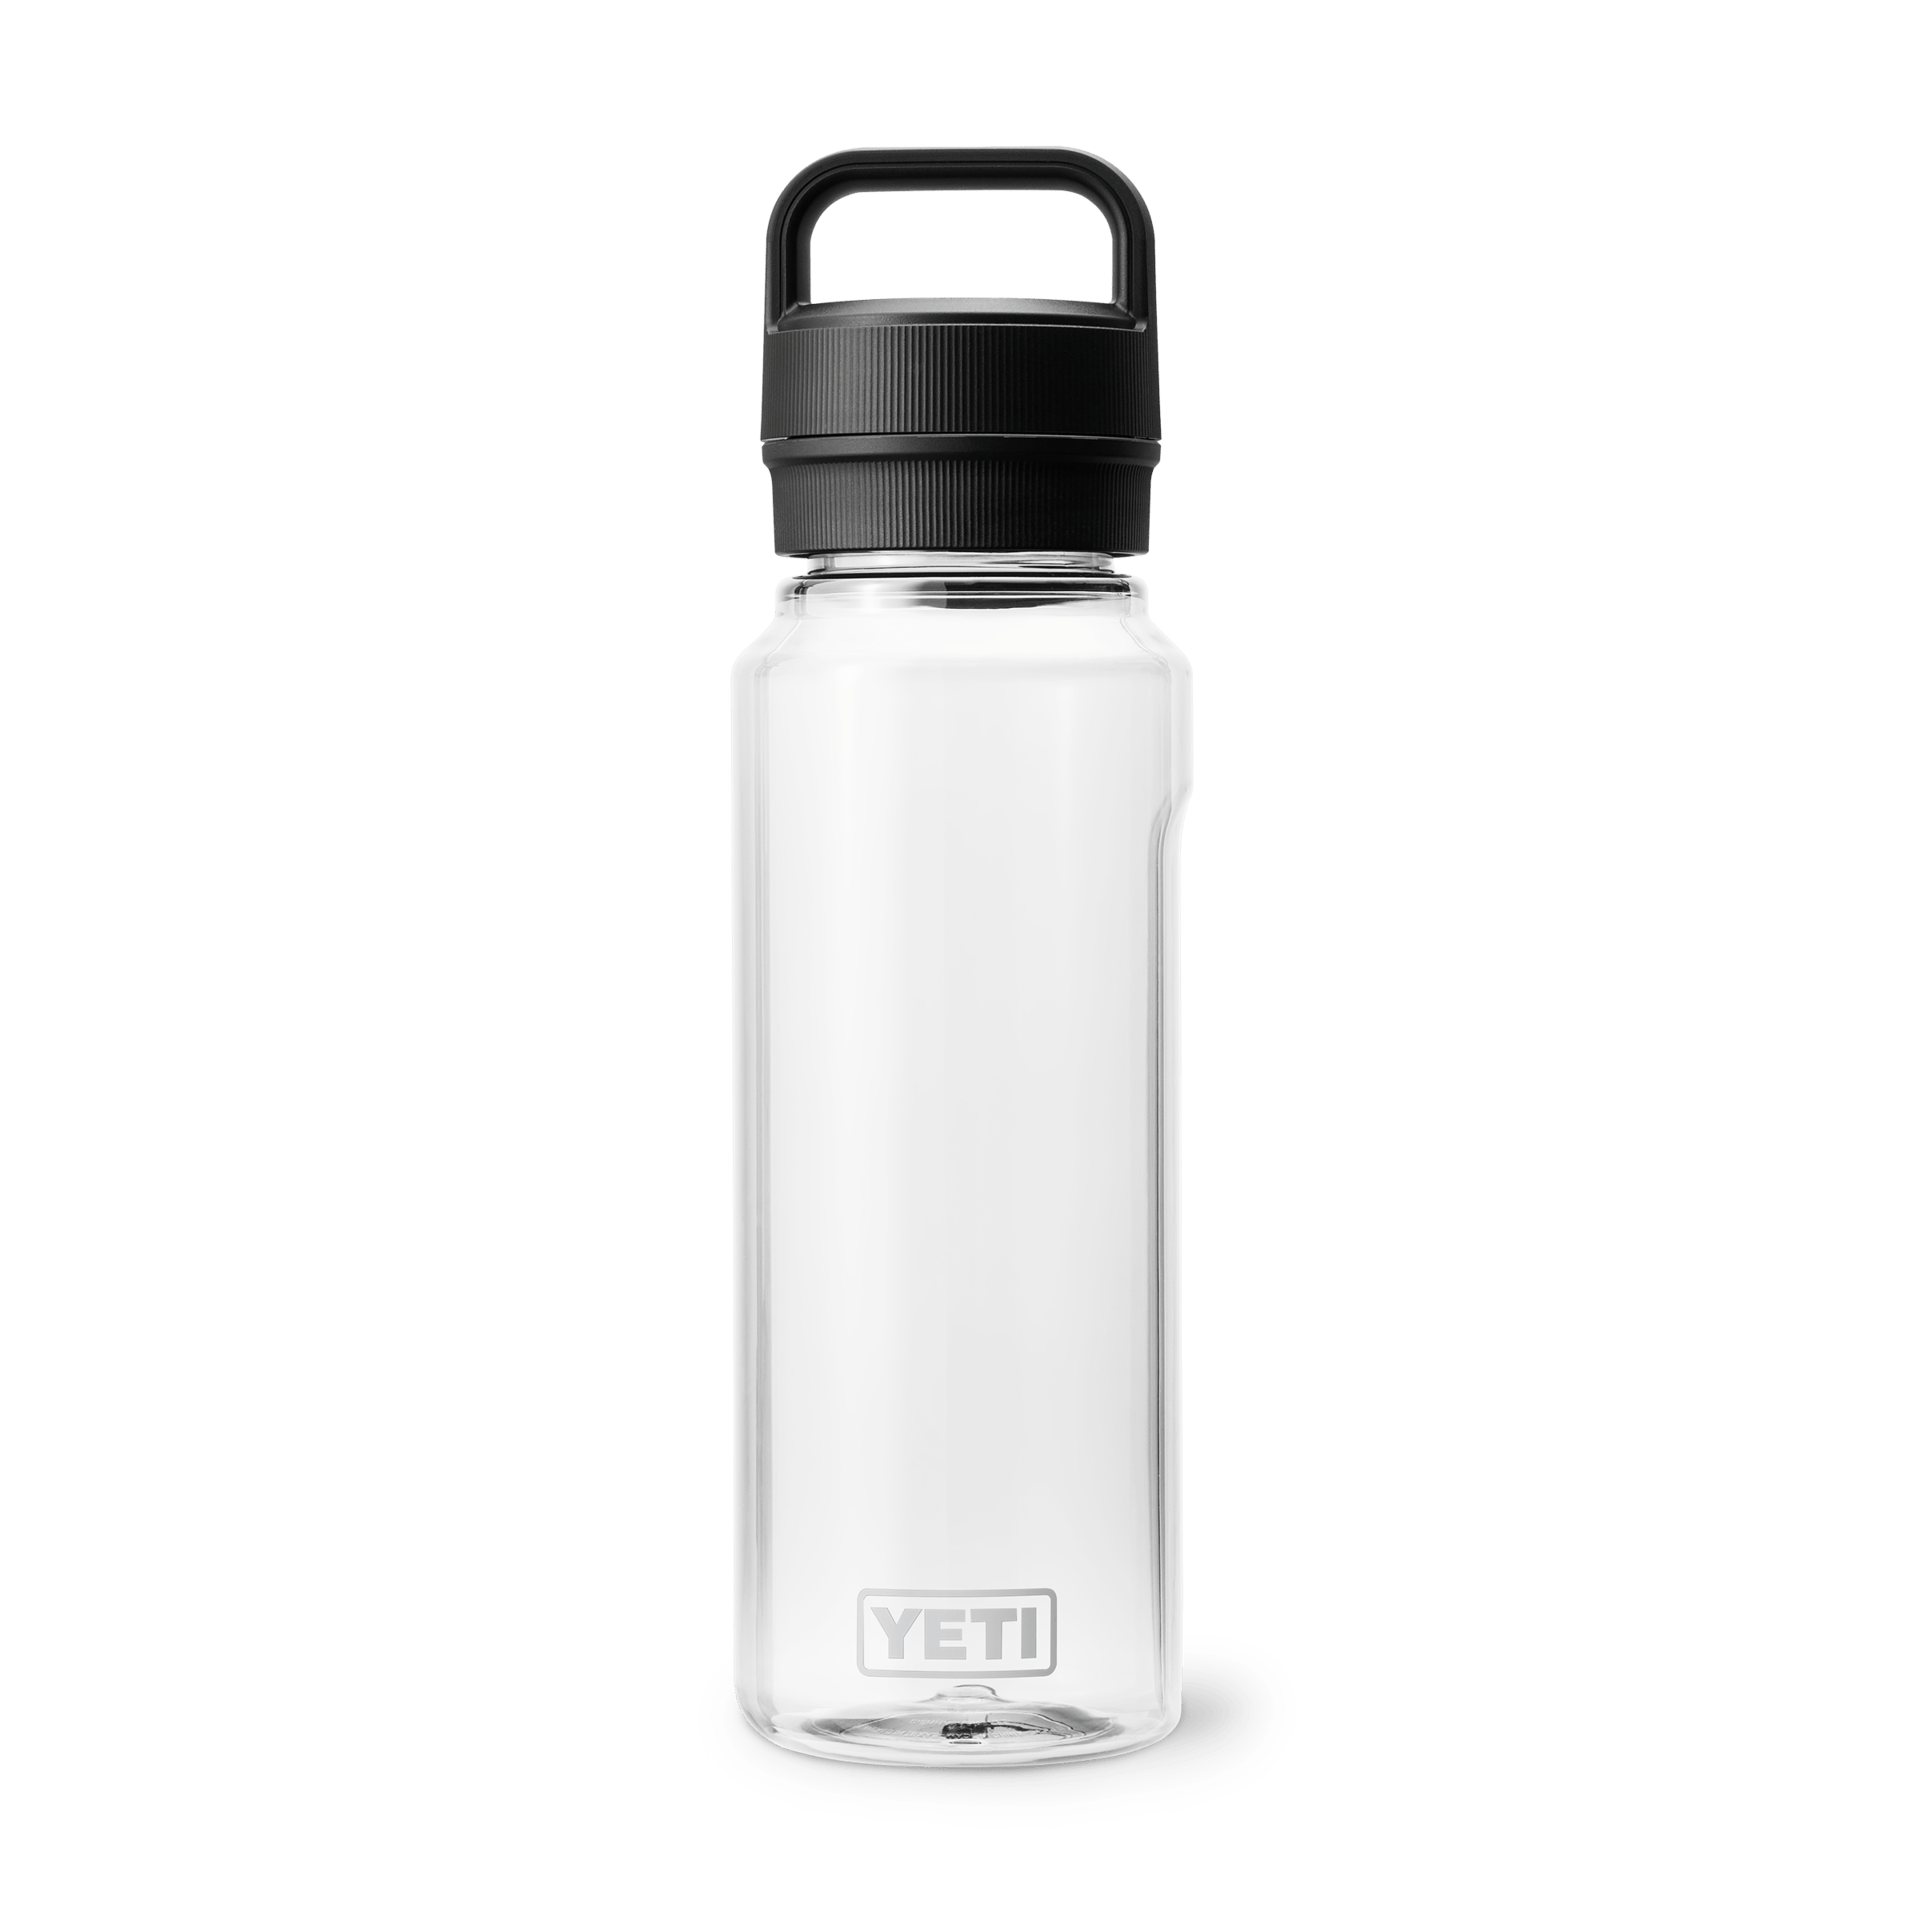 YETI Rambler 36 oz Bottle with Chug Cap - Black